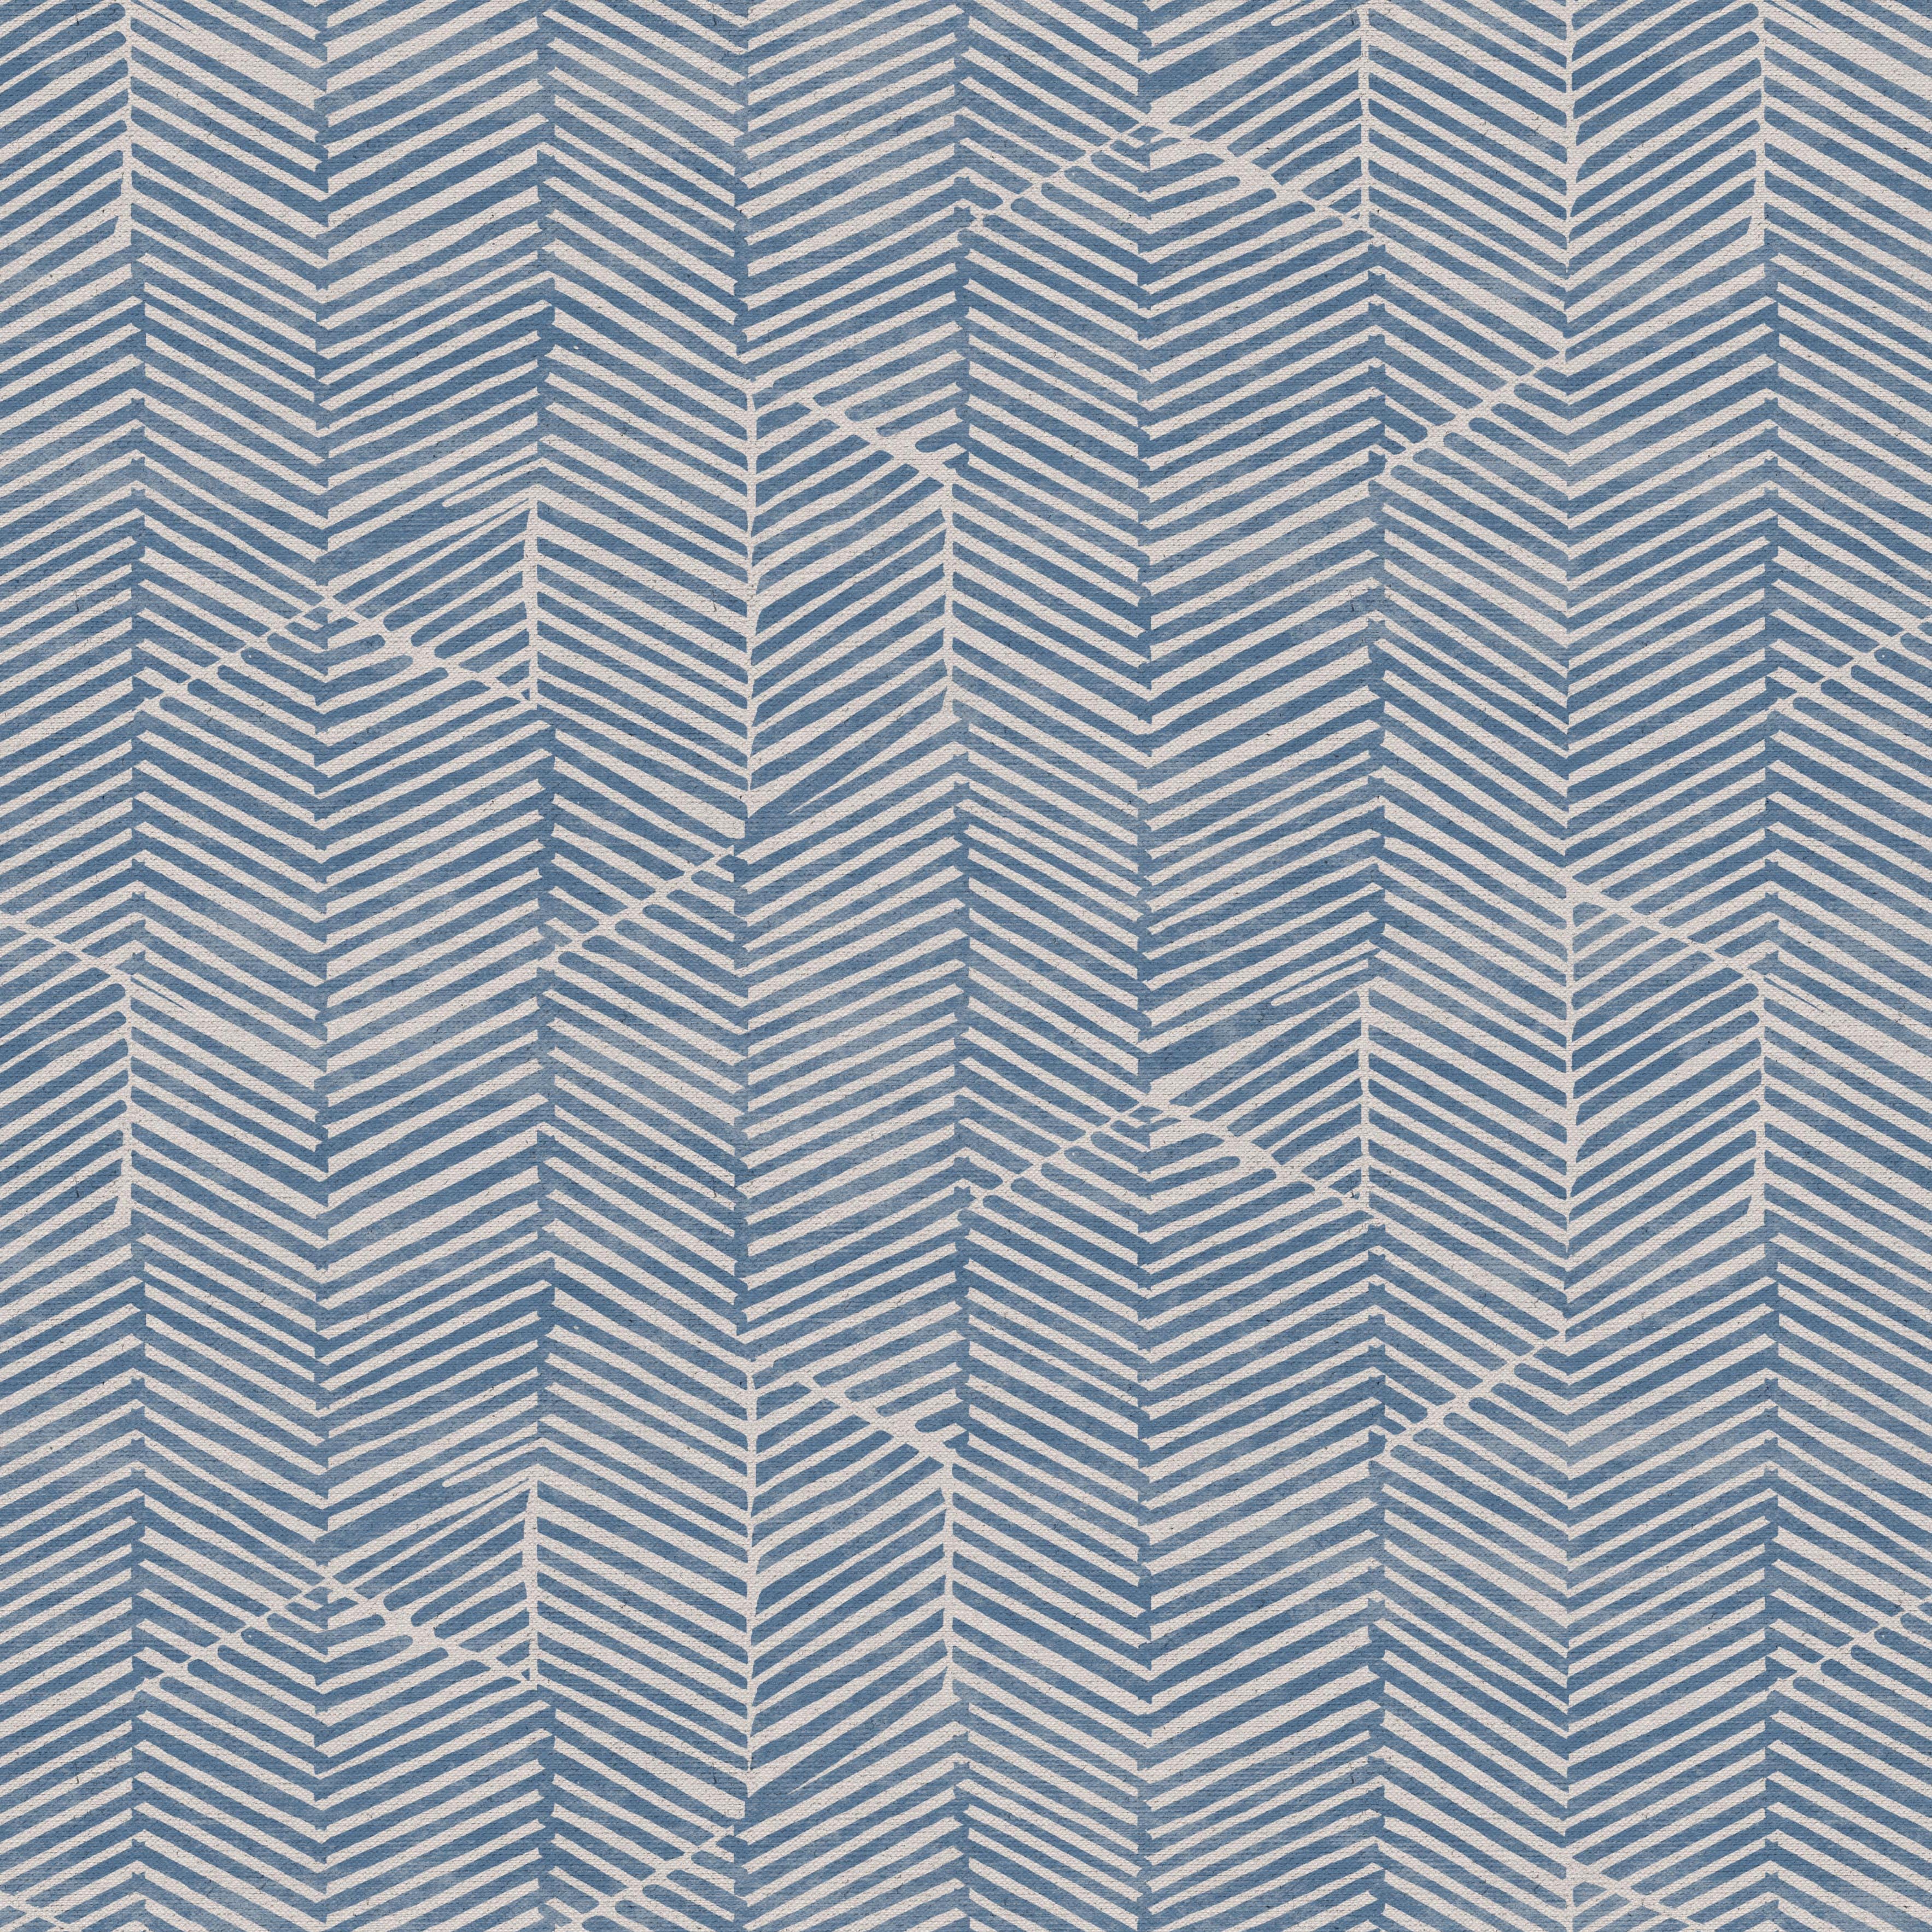 Detail of fabric in a dense herringbone print in dusty blue on a tan field.